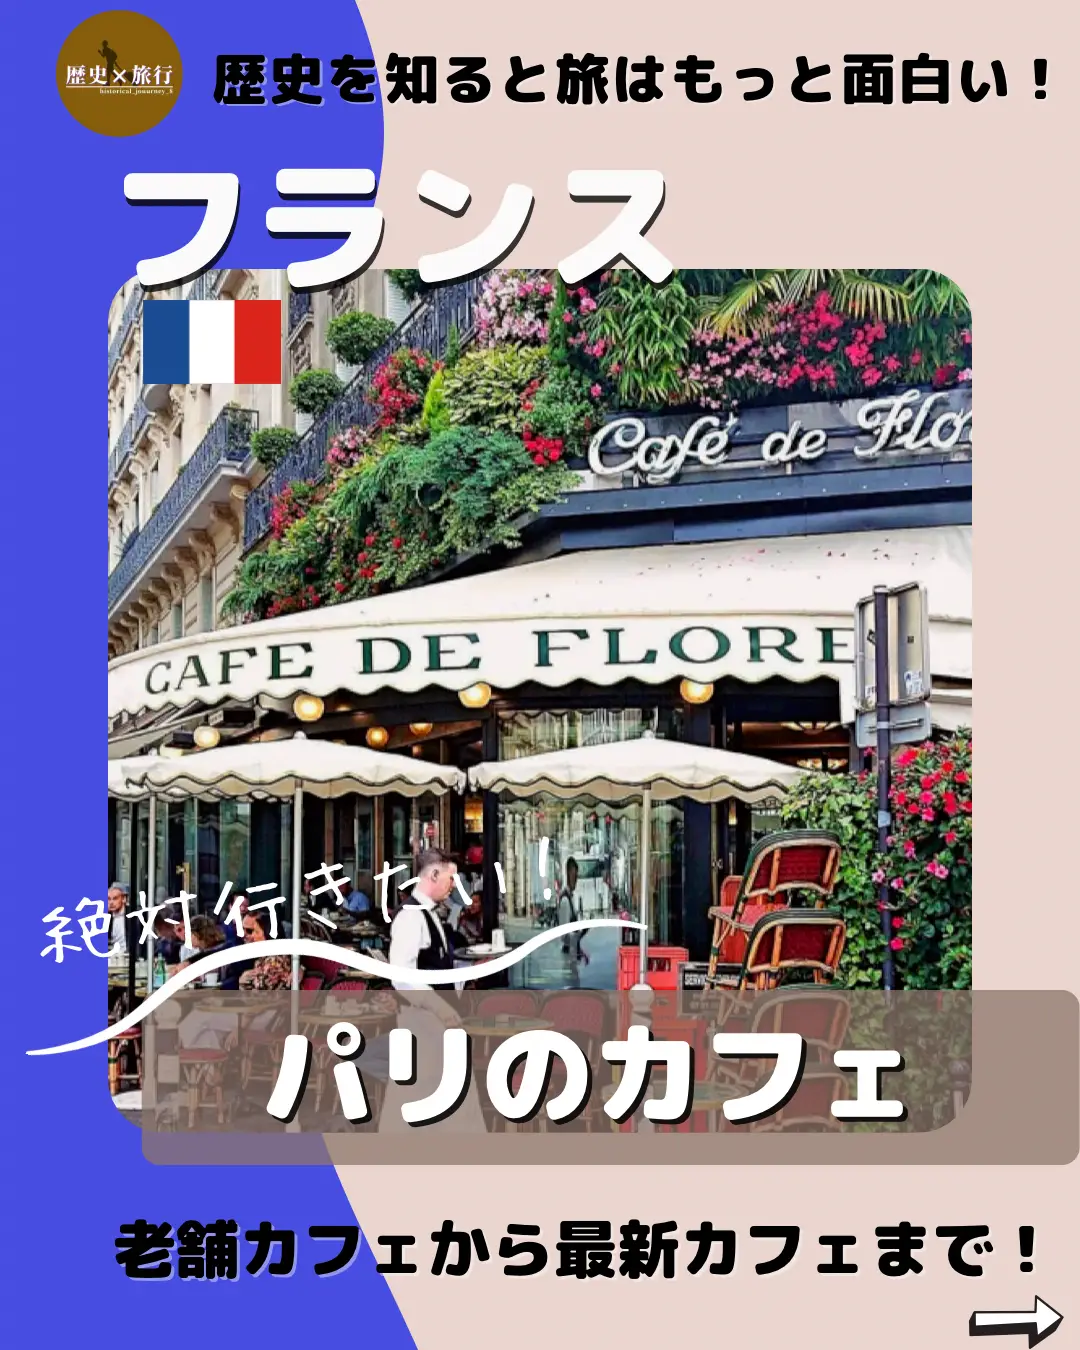 Thoughtful Cafe in Paris - Lemon8検索